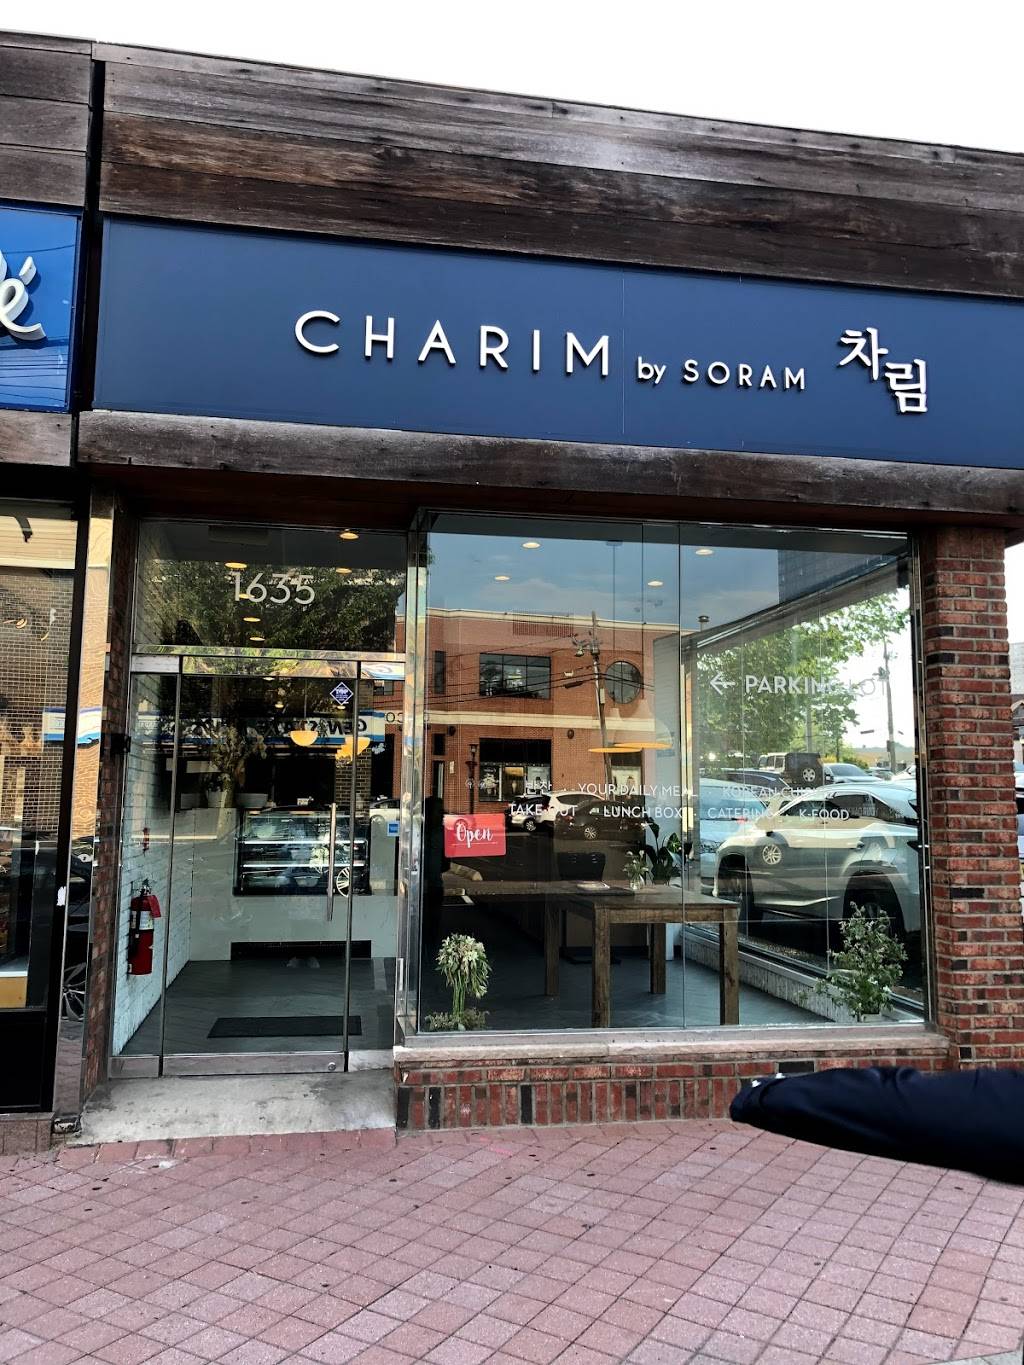 Charim | restaurant | 1635 Lemoine Ave, Fort Lee, NJ 07024, USA | 2013026019 OR +1 201-302-6019